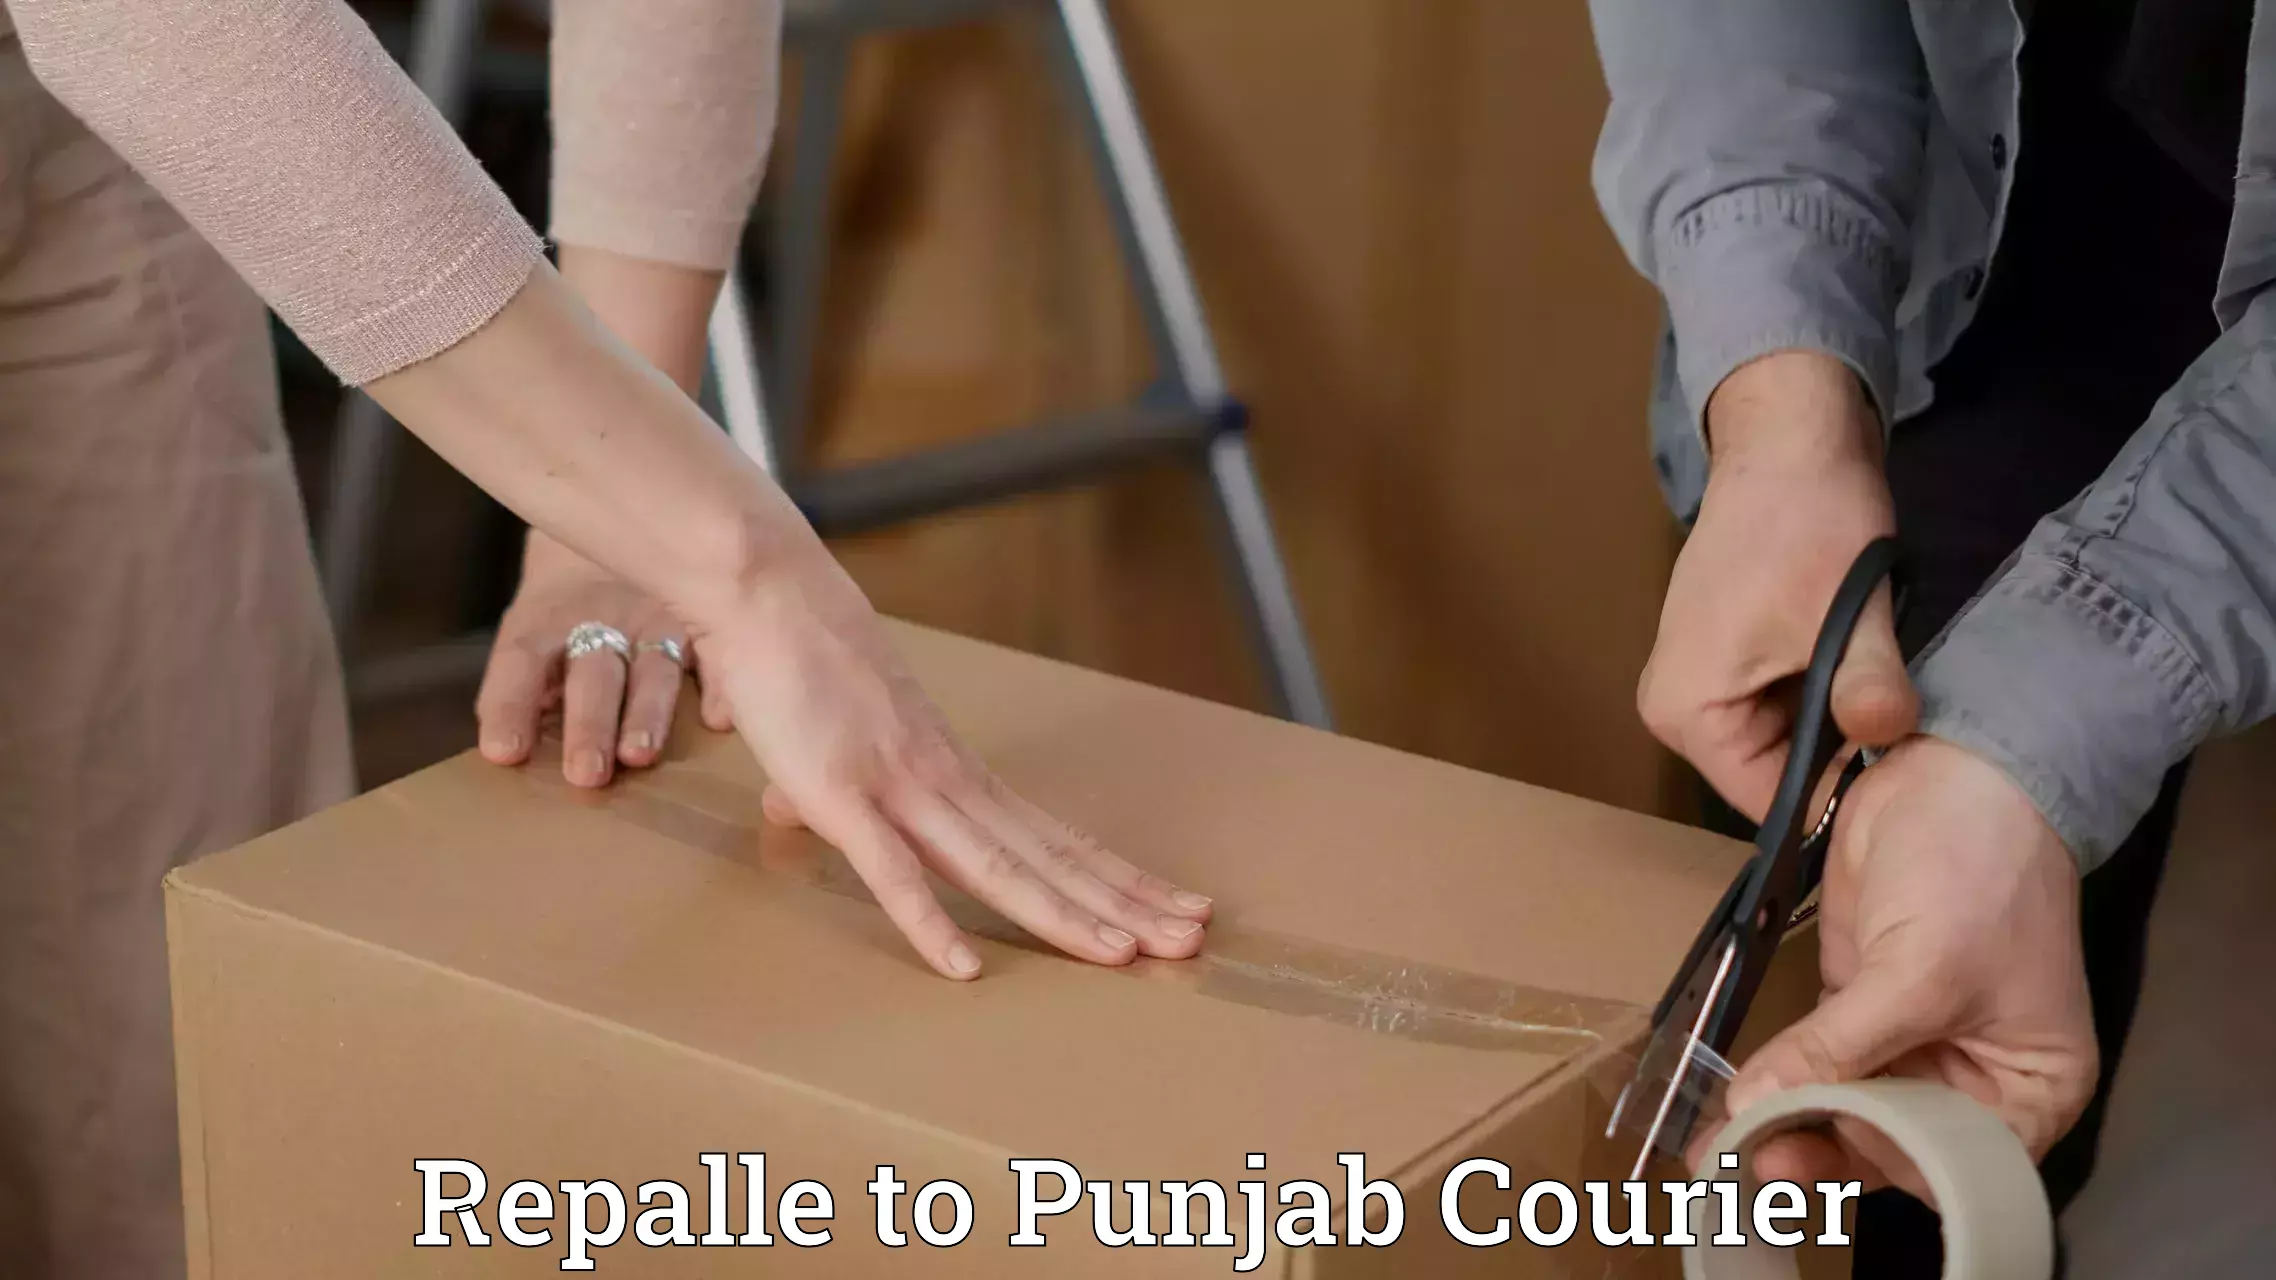 Baggage shipping service Repalle to Punjab